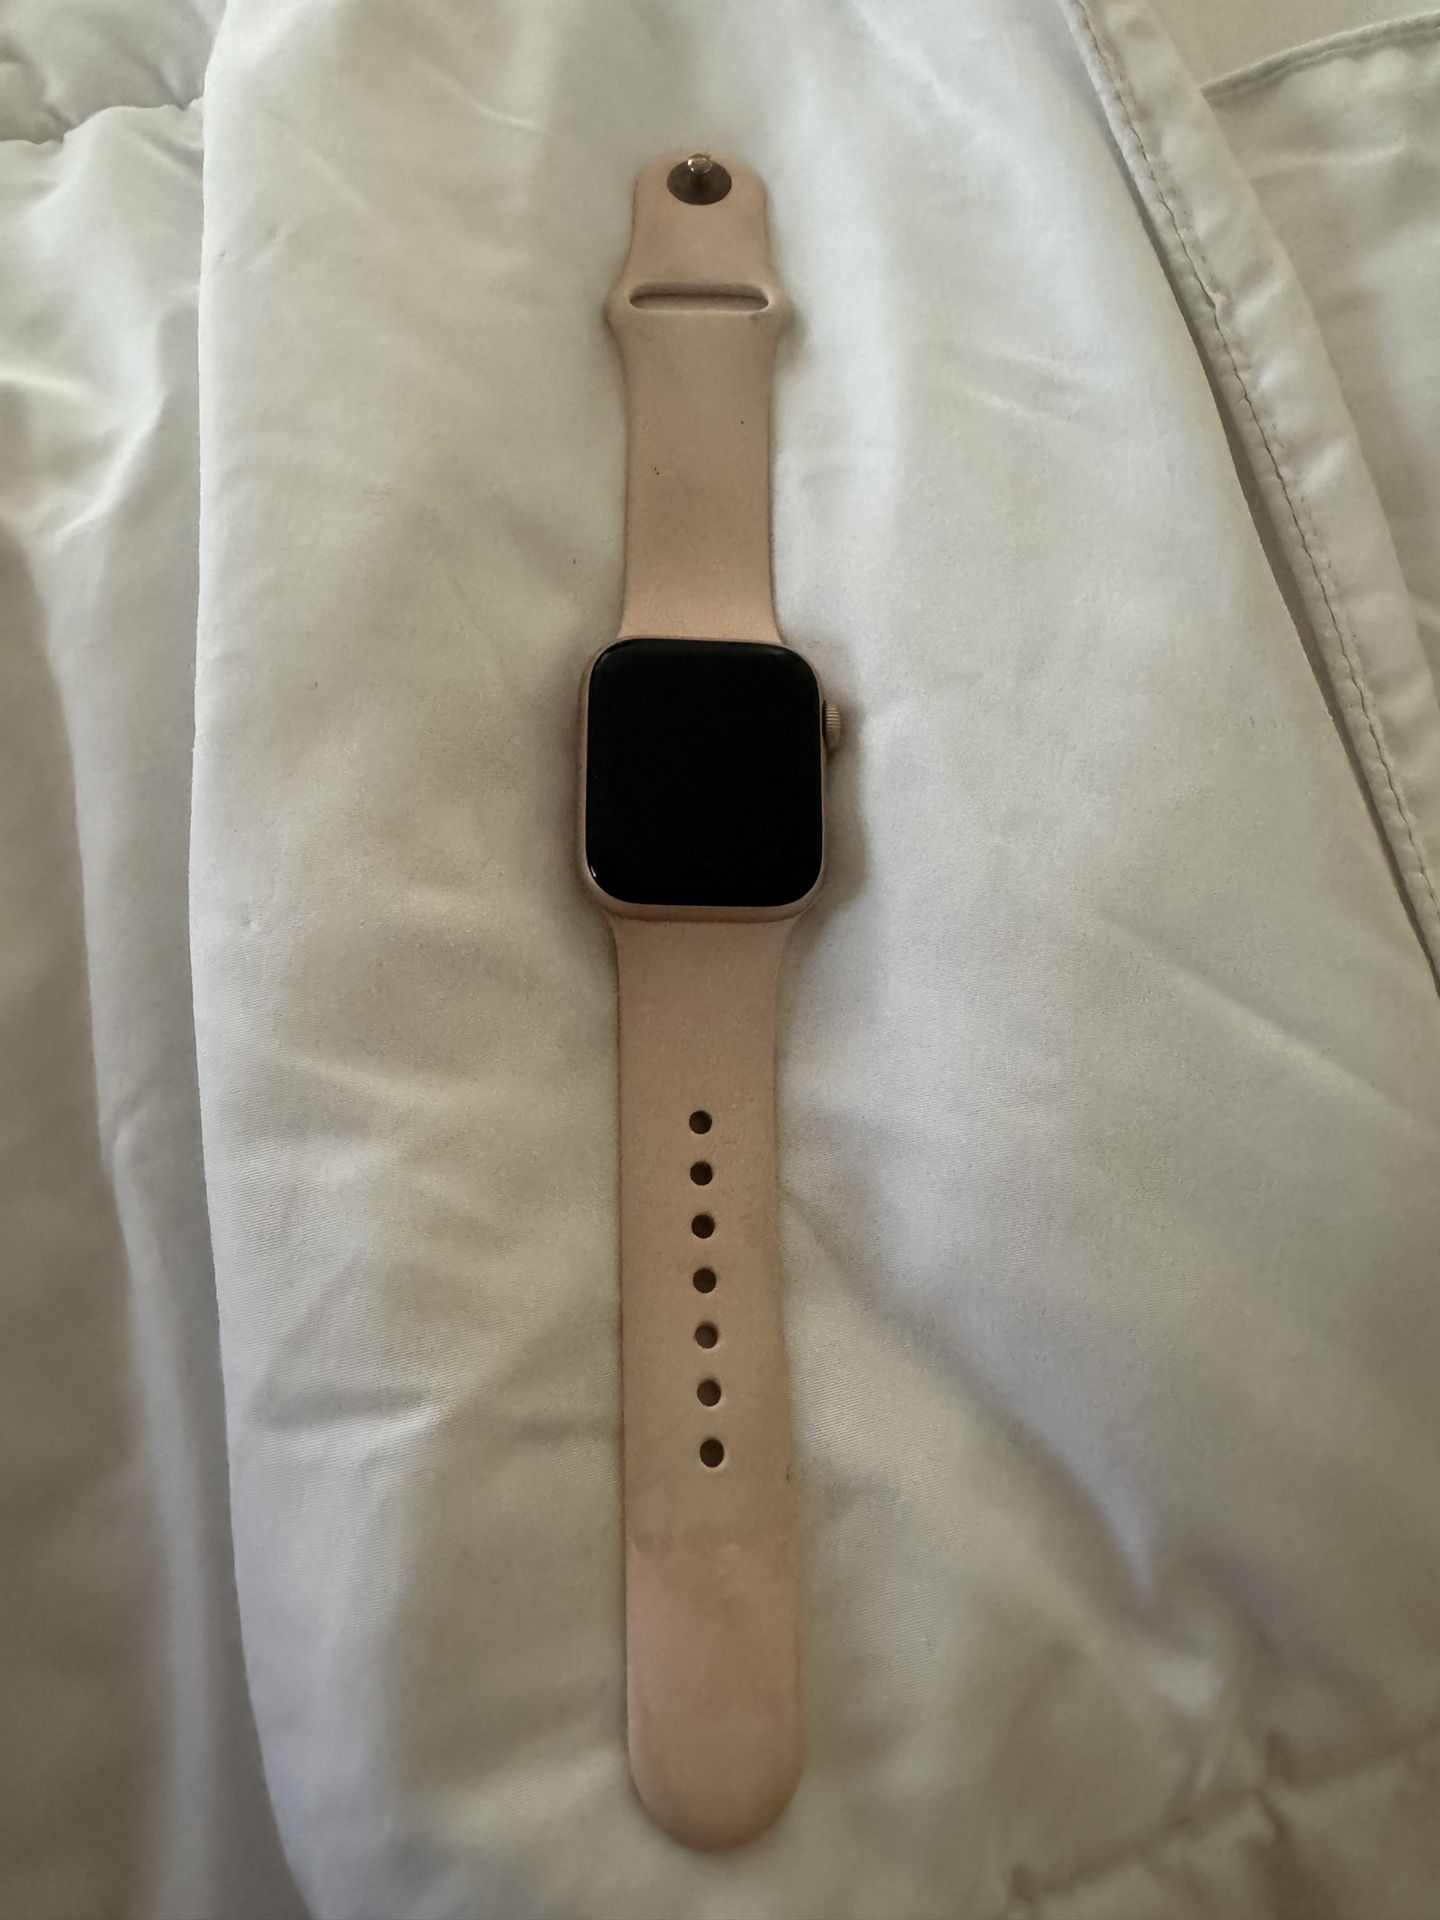 Apple Watch Series 4 